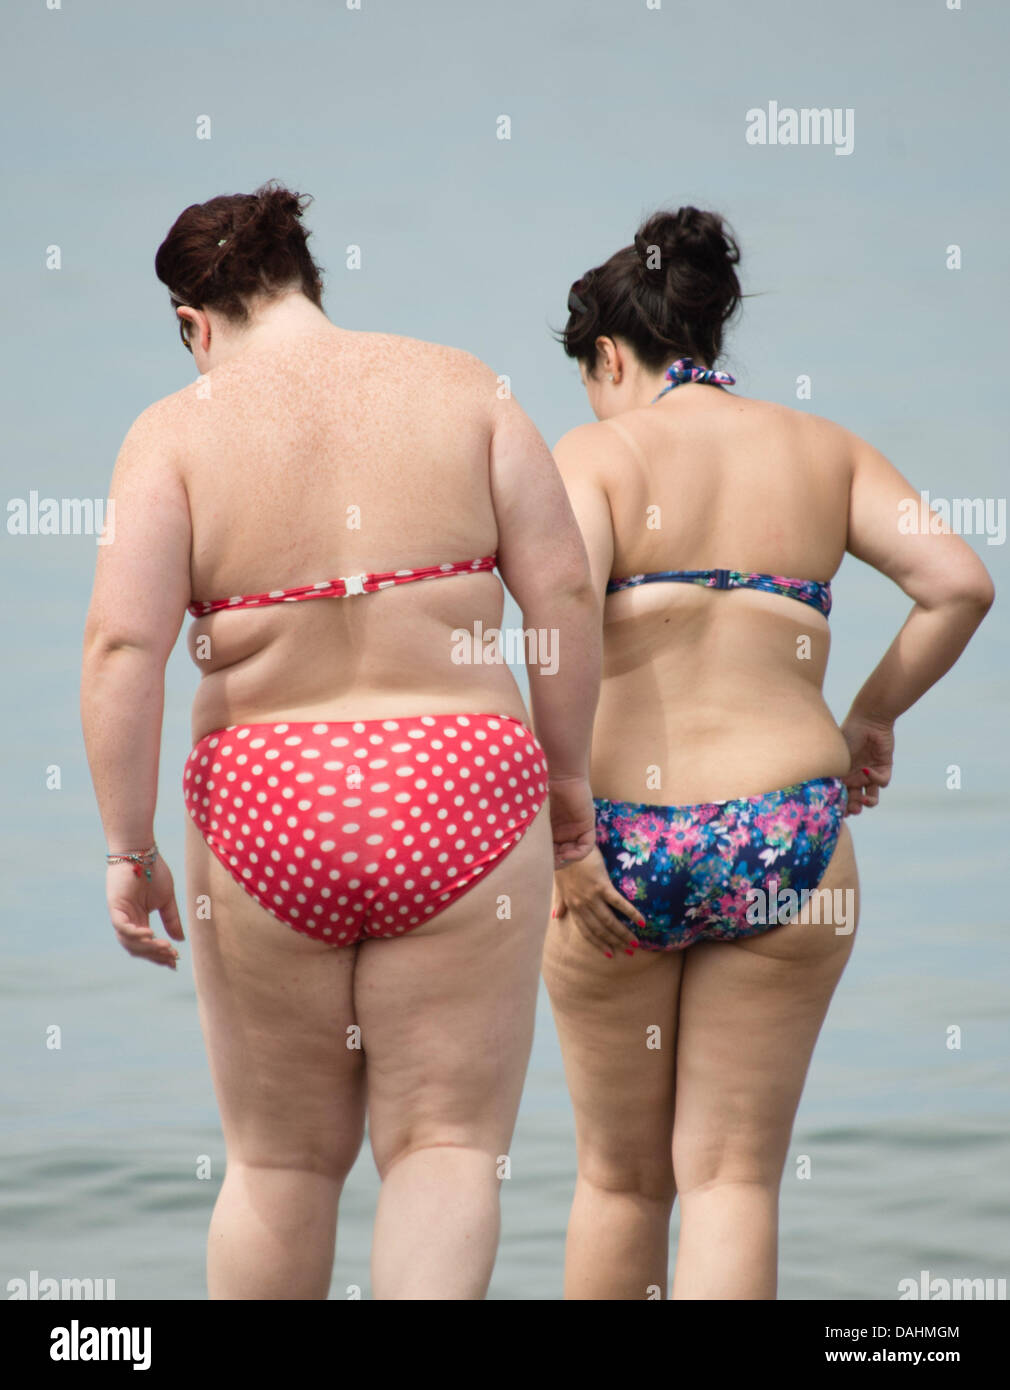 Menschen im bikini fette Seite 2